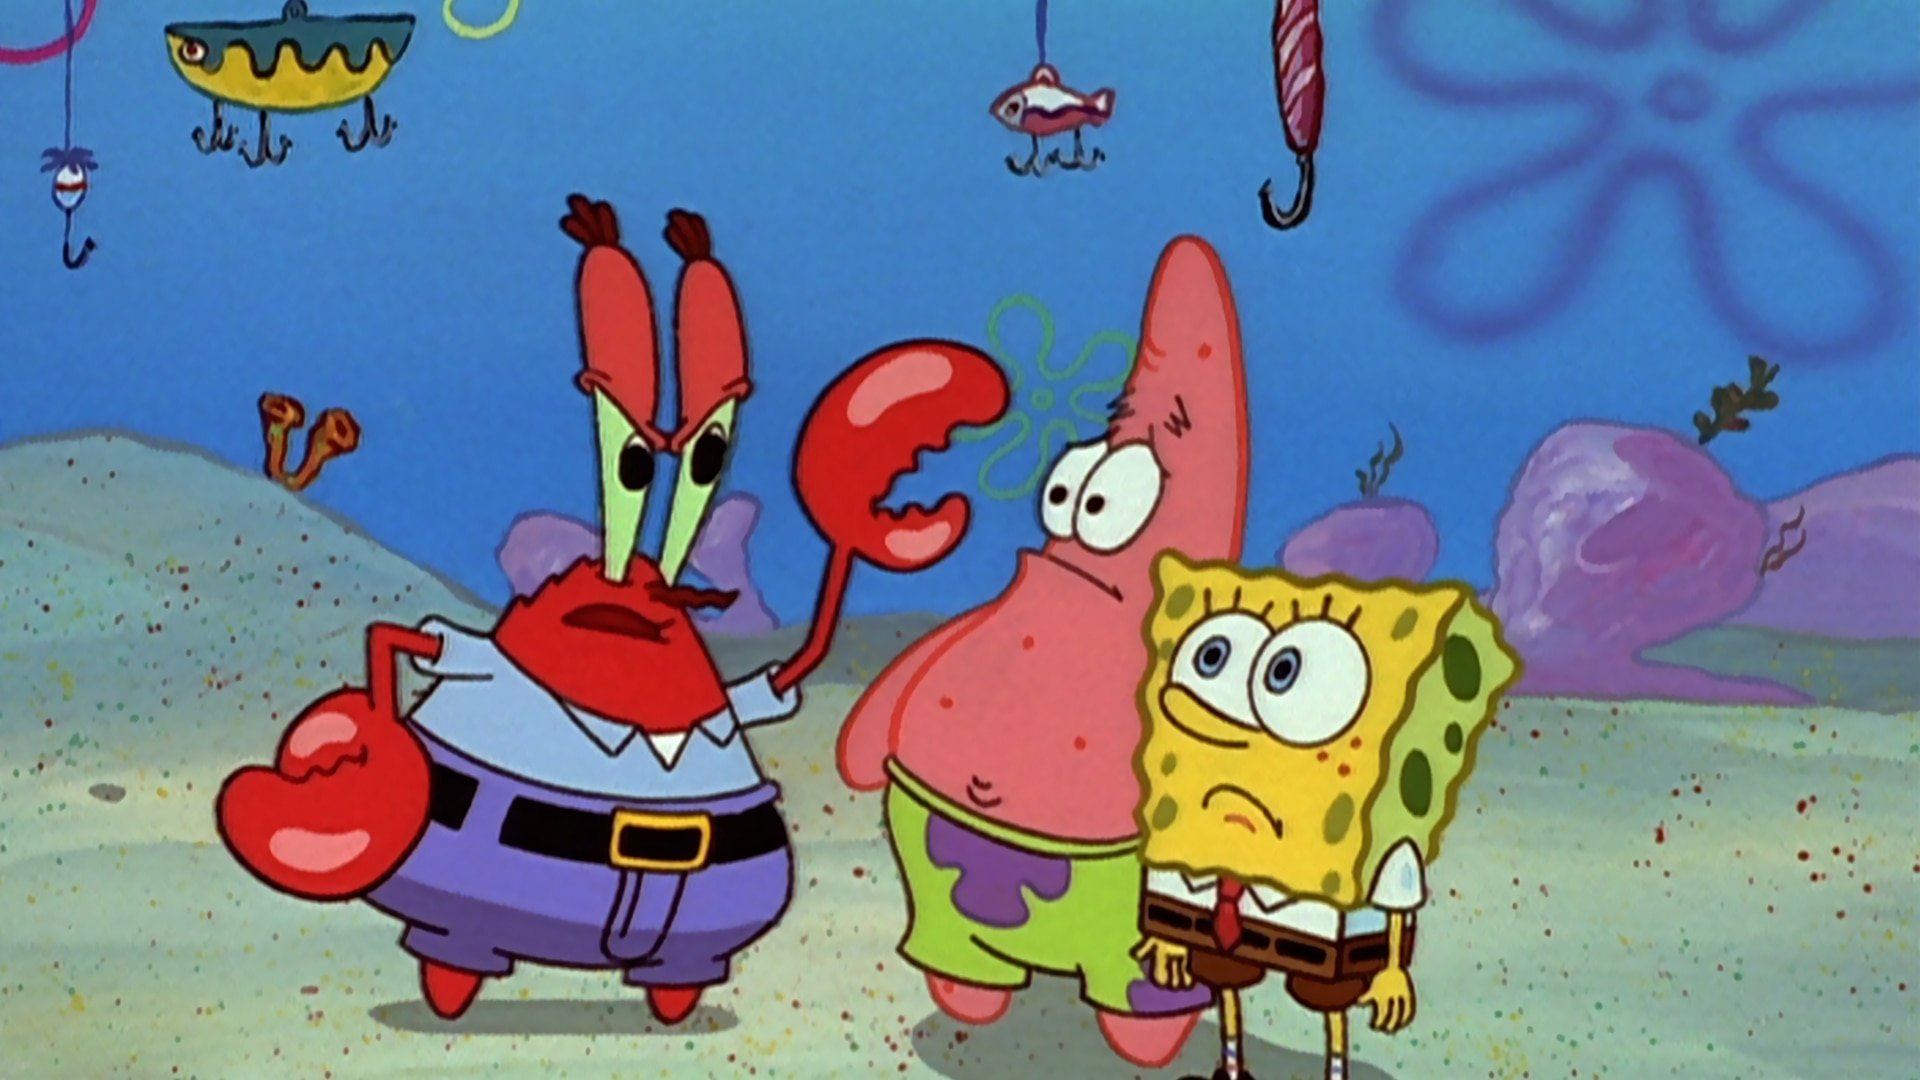 spongebob season 3 online